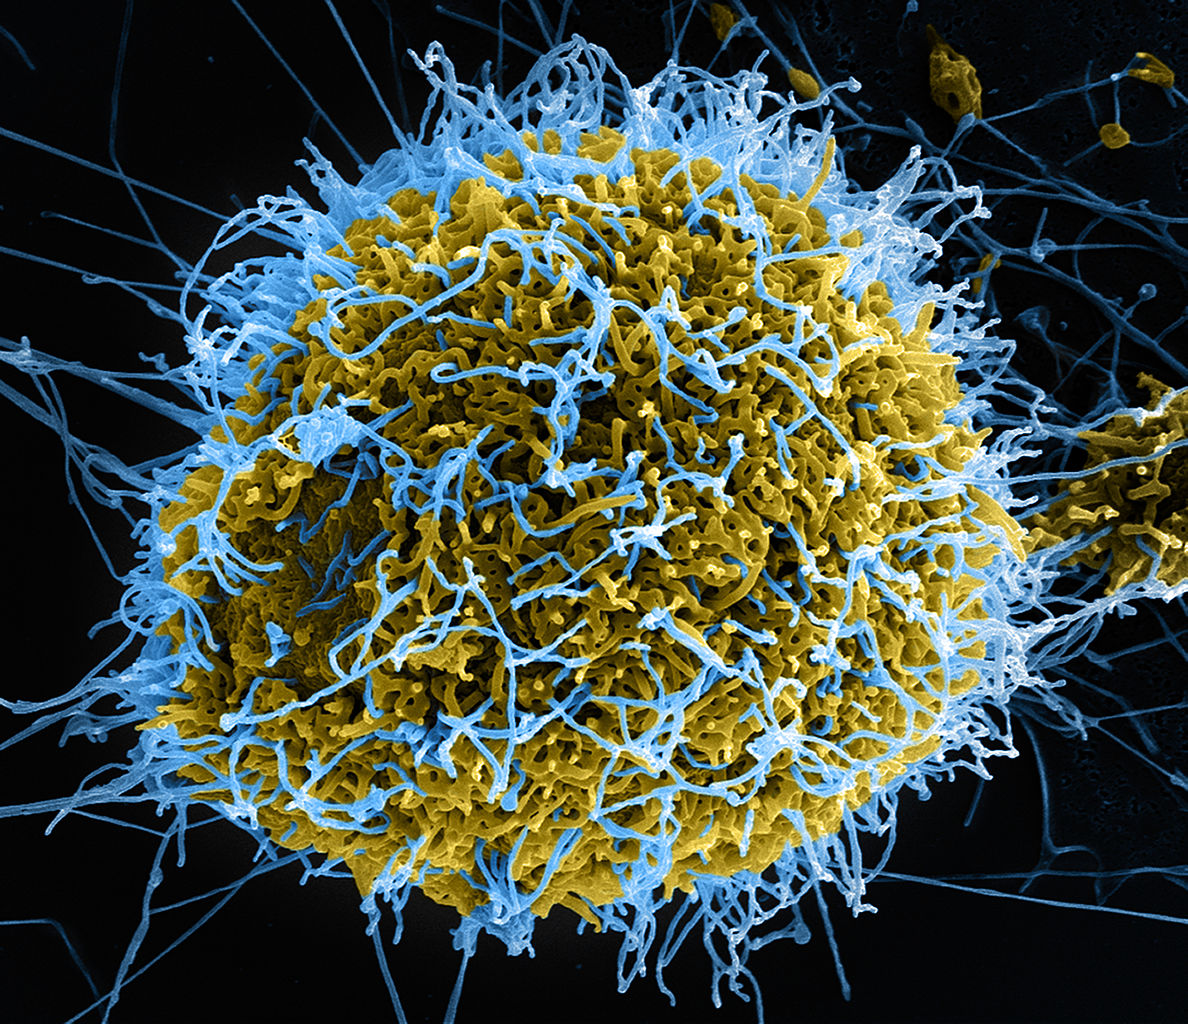 Ebola_Virus_Particles_(7)